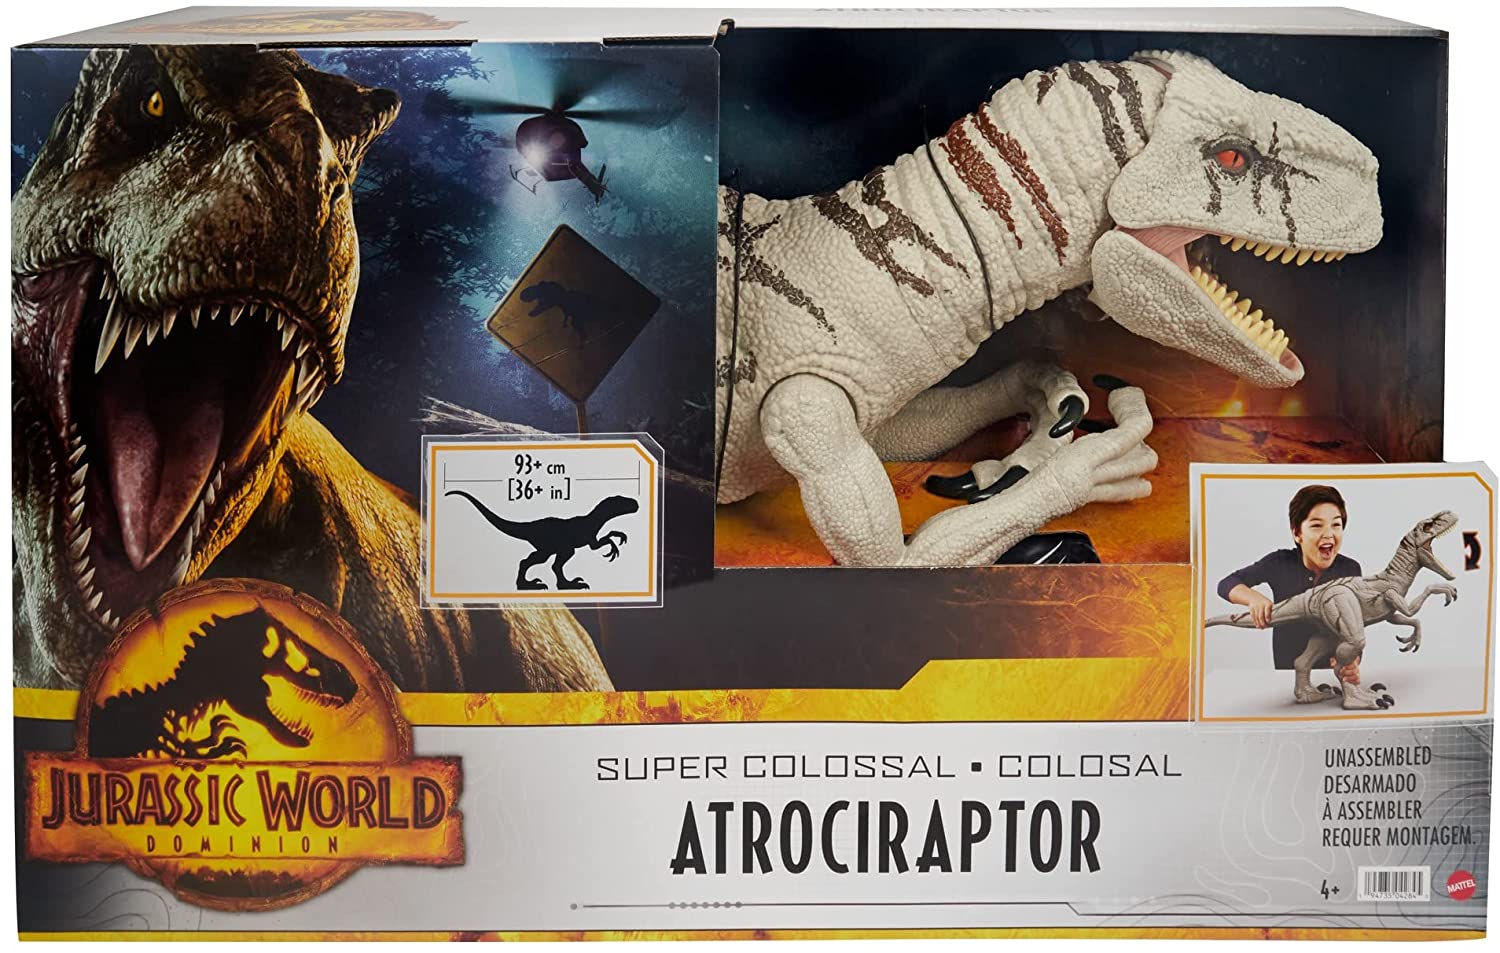 Jurassic World - Super Colossal - Atrociraptor